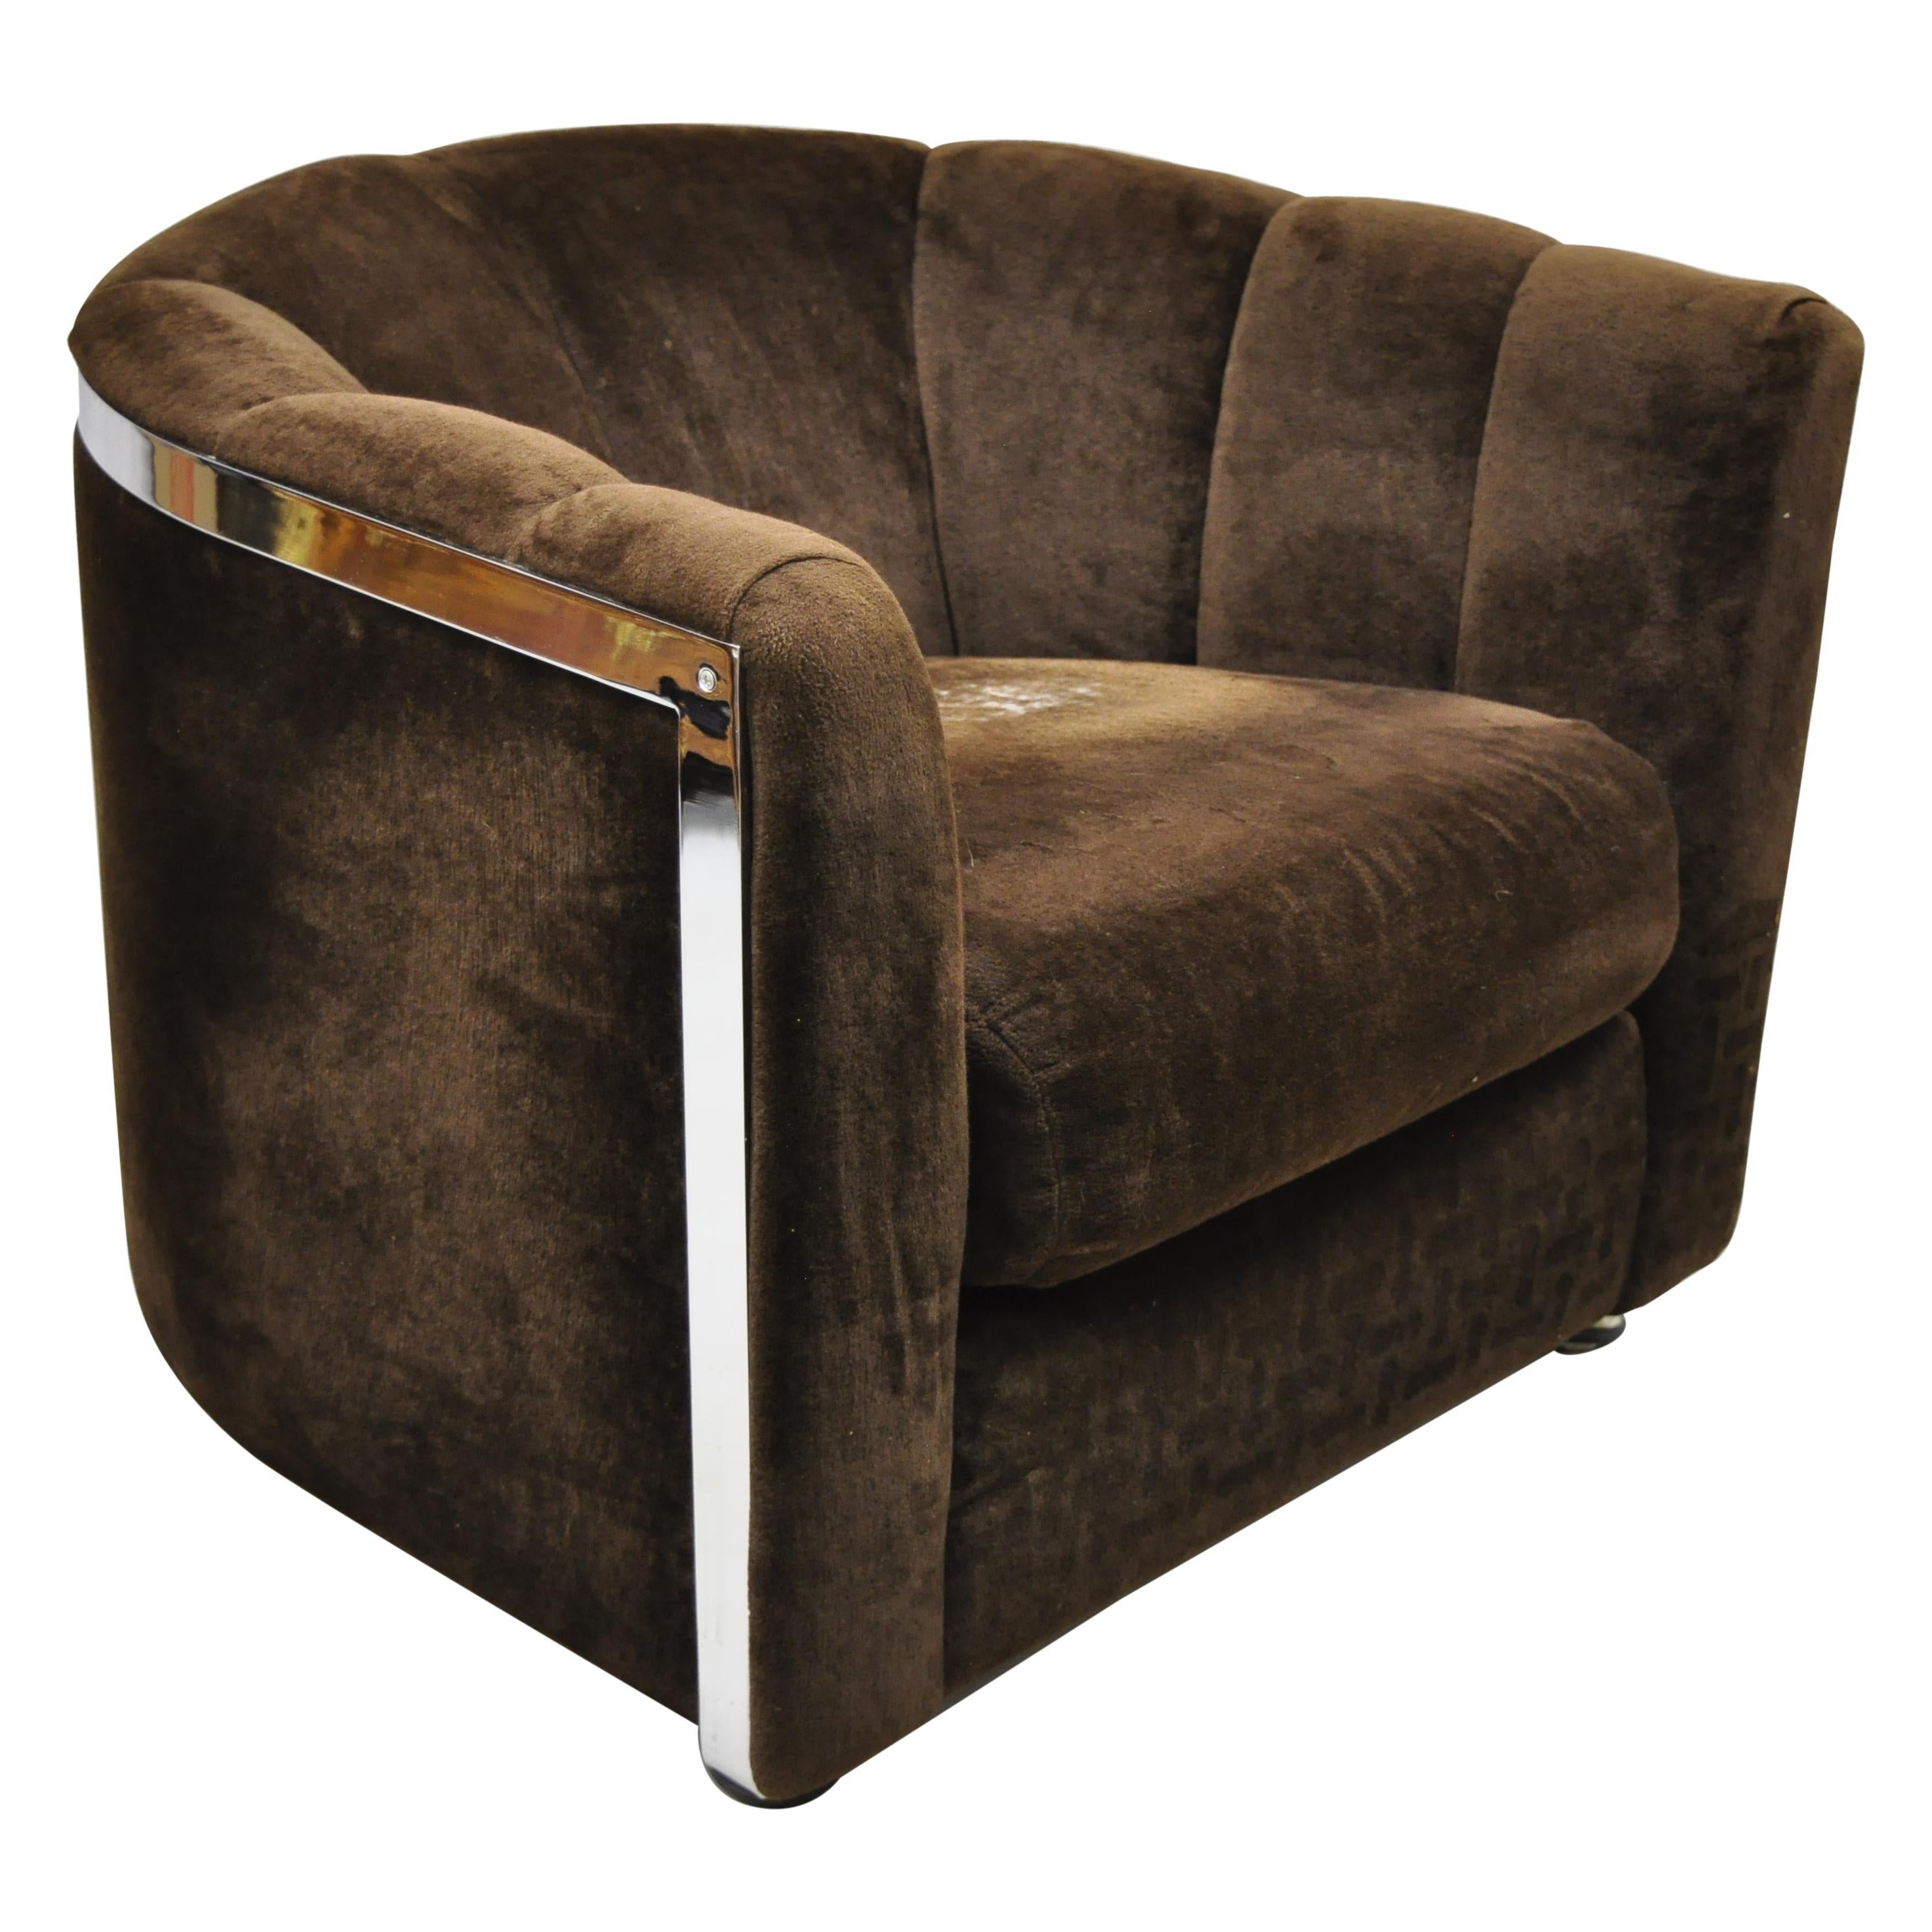 Rowe Mid-Century Modern Chrome Trim Baughman Style Upholstered Club Lounge Chair